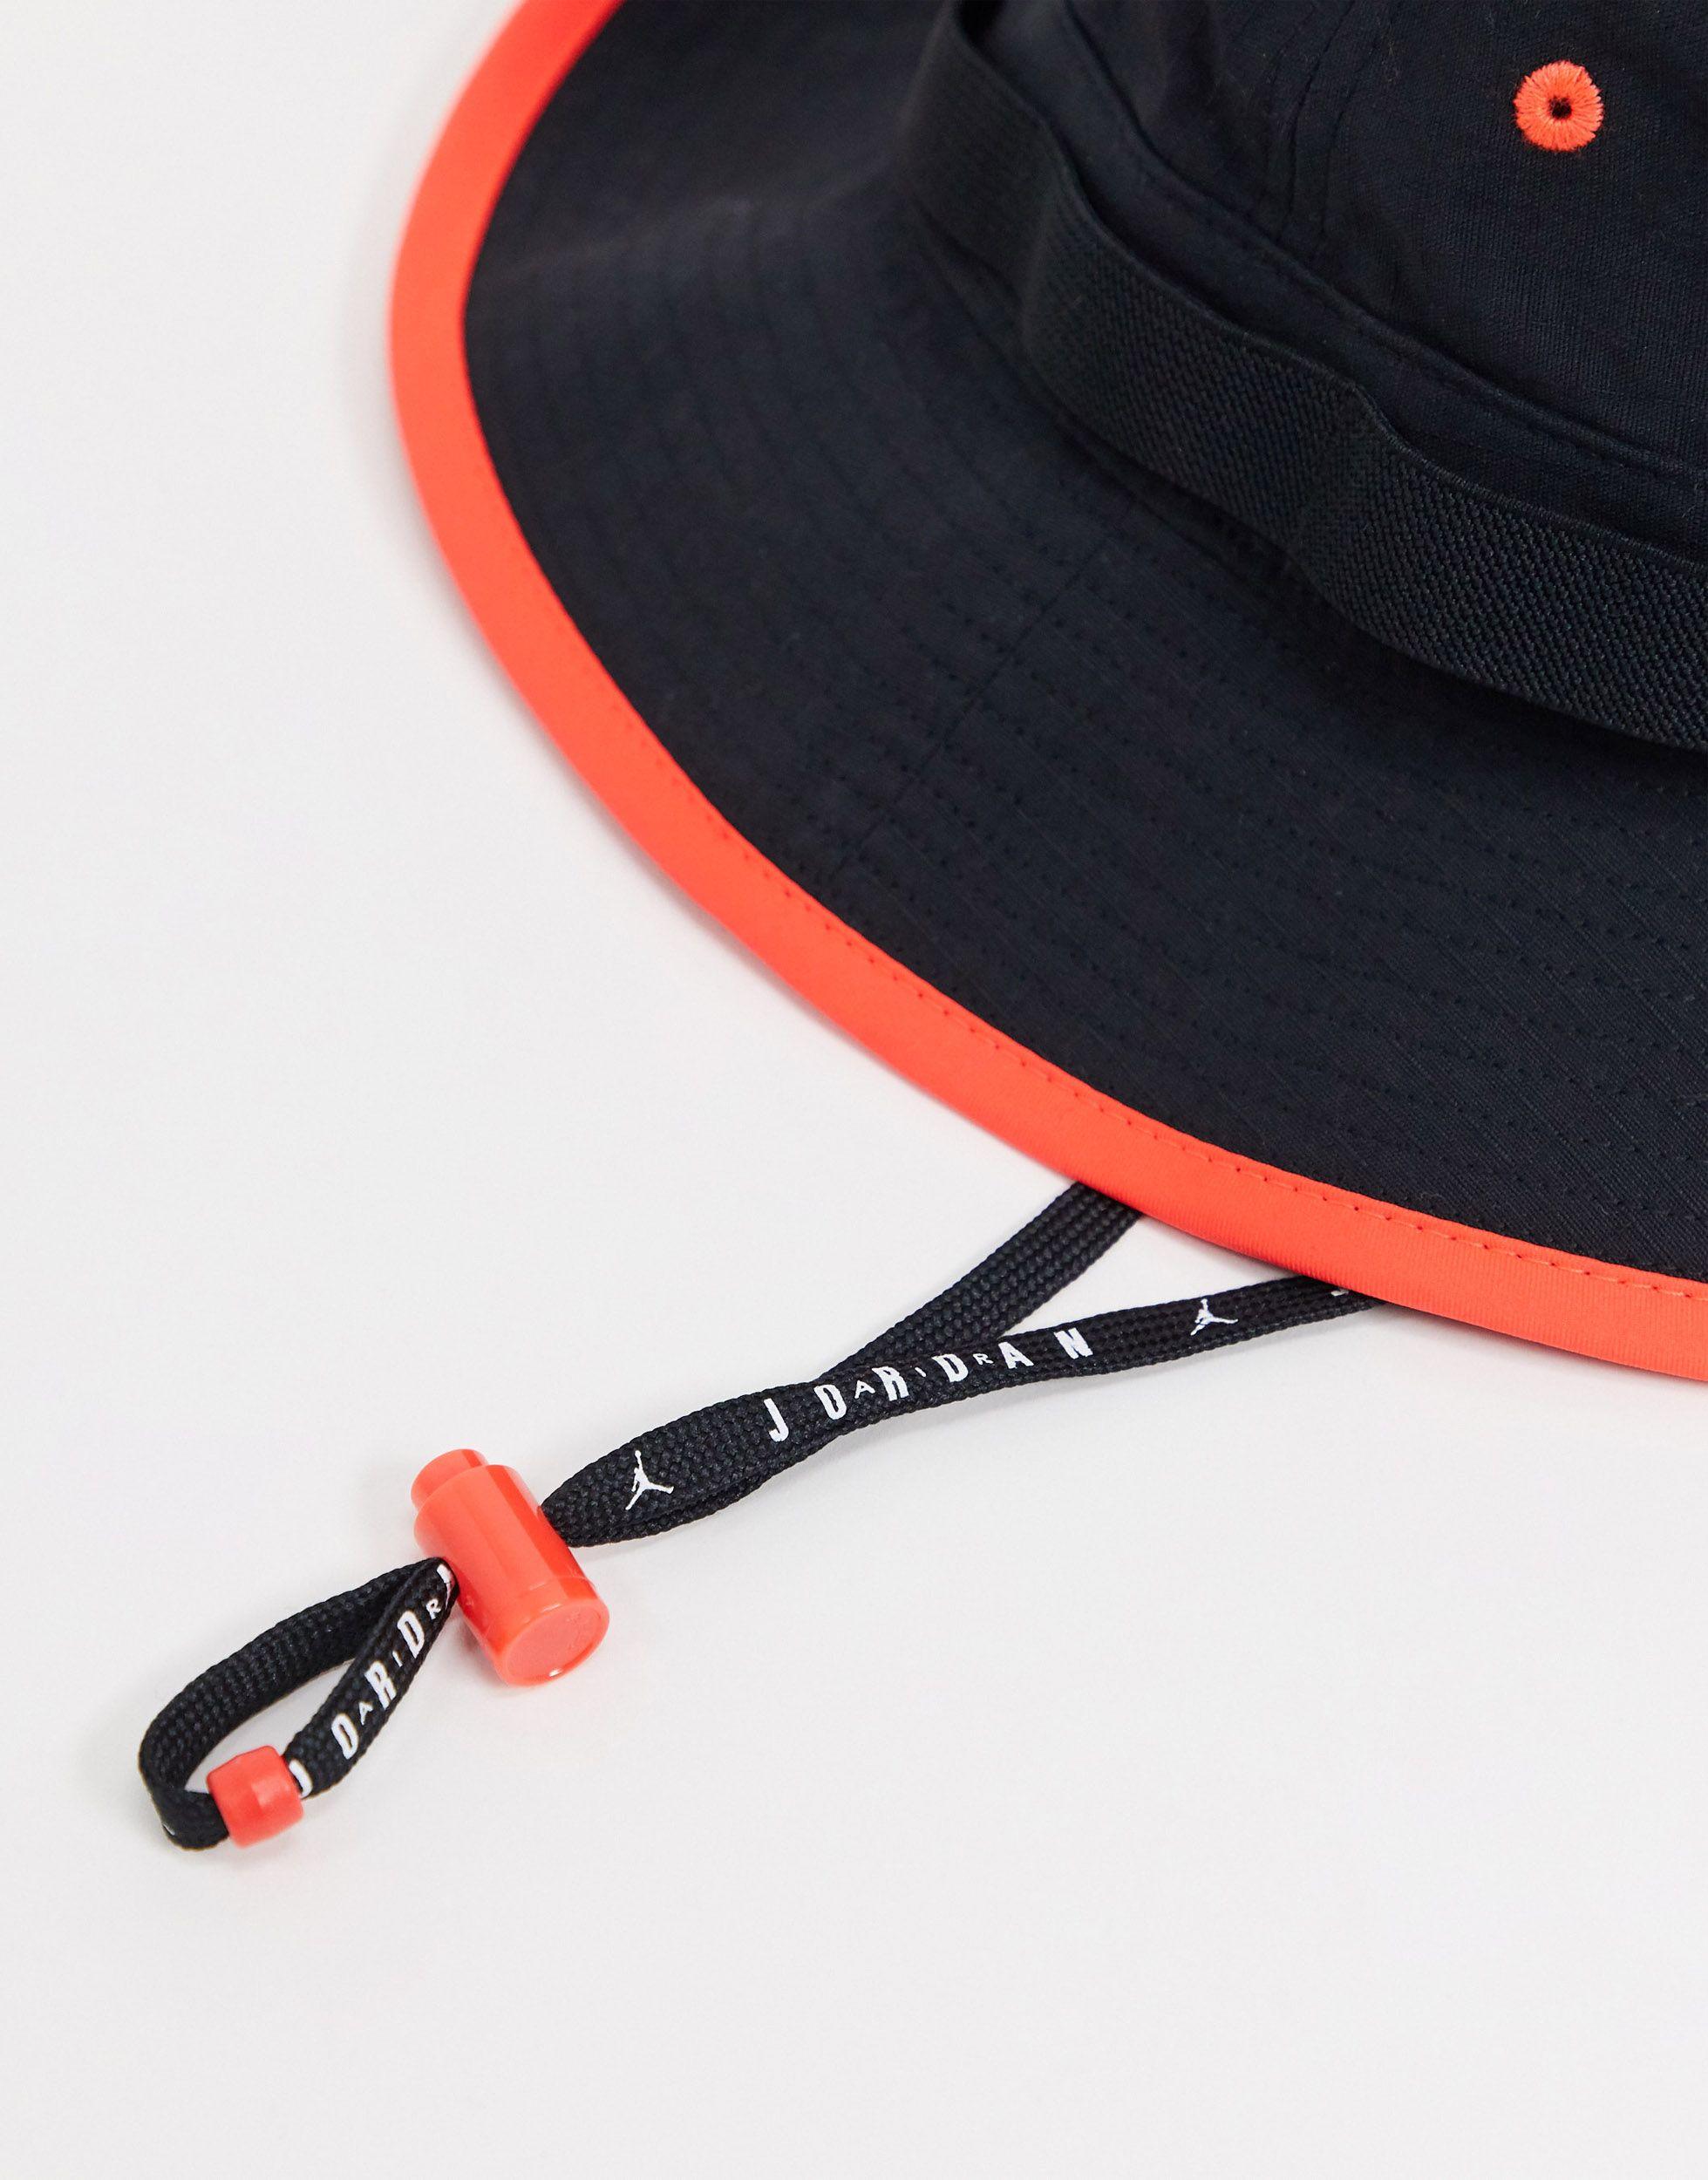 Nike Nike Drawstring Bucket Hat in Black for Men - Lyst